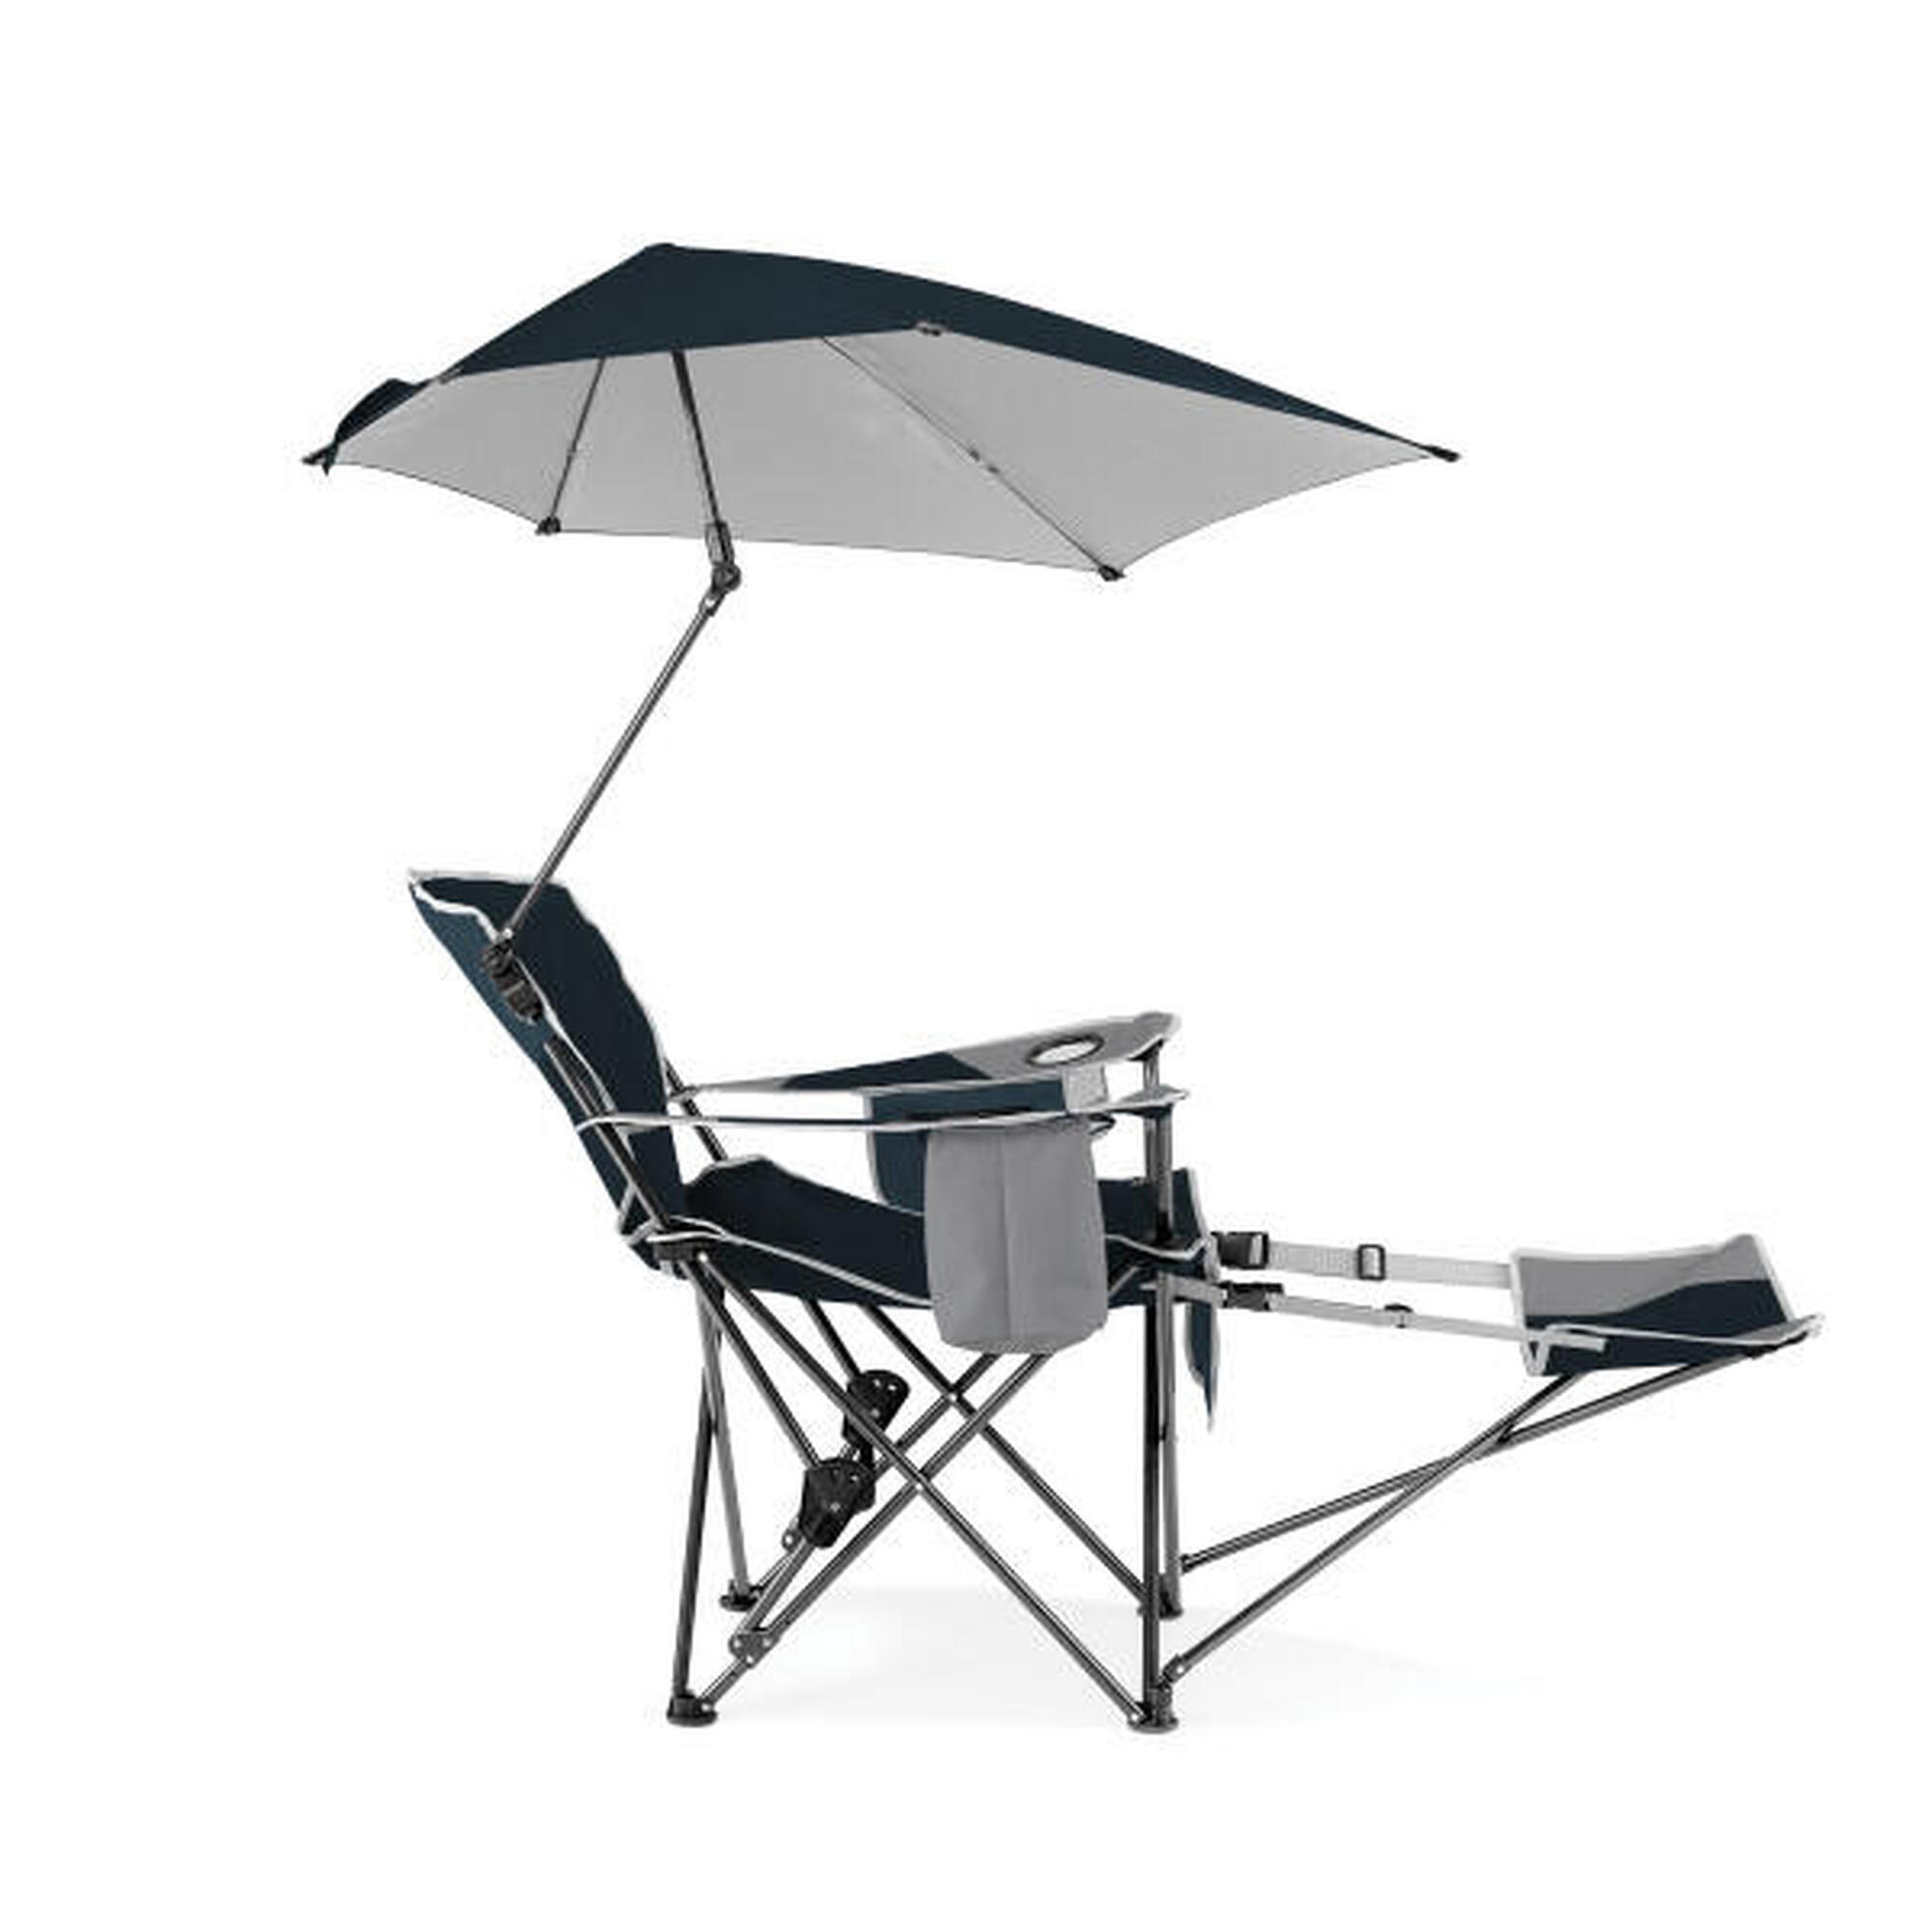 Poltrona Sport-Brella ideal para camping e praia com guarda-sóis integrados